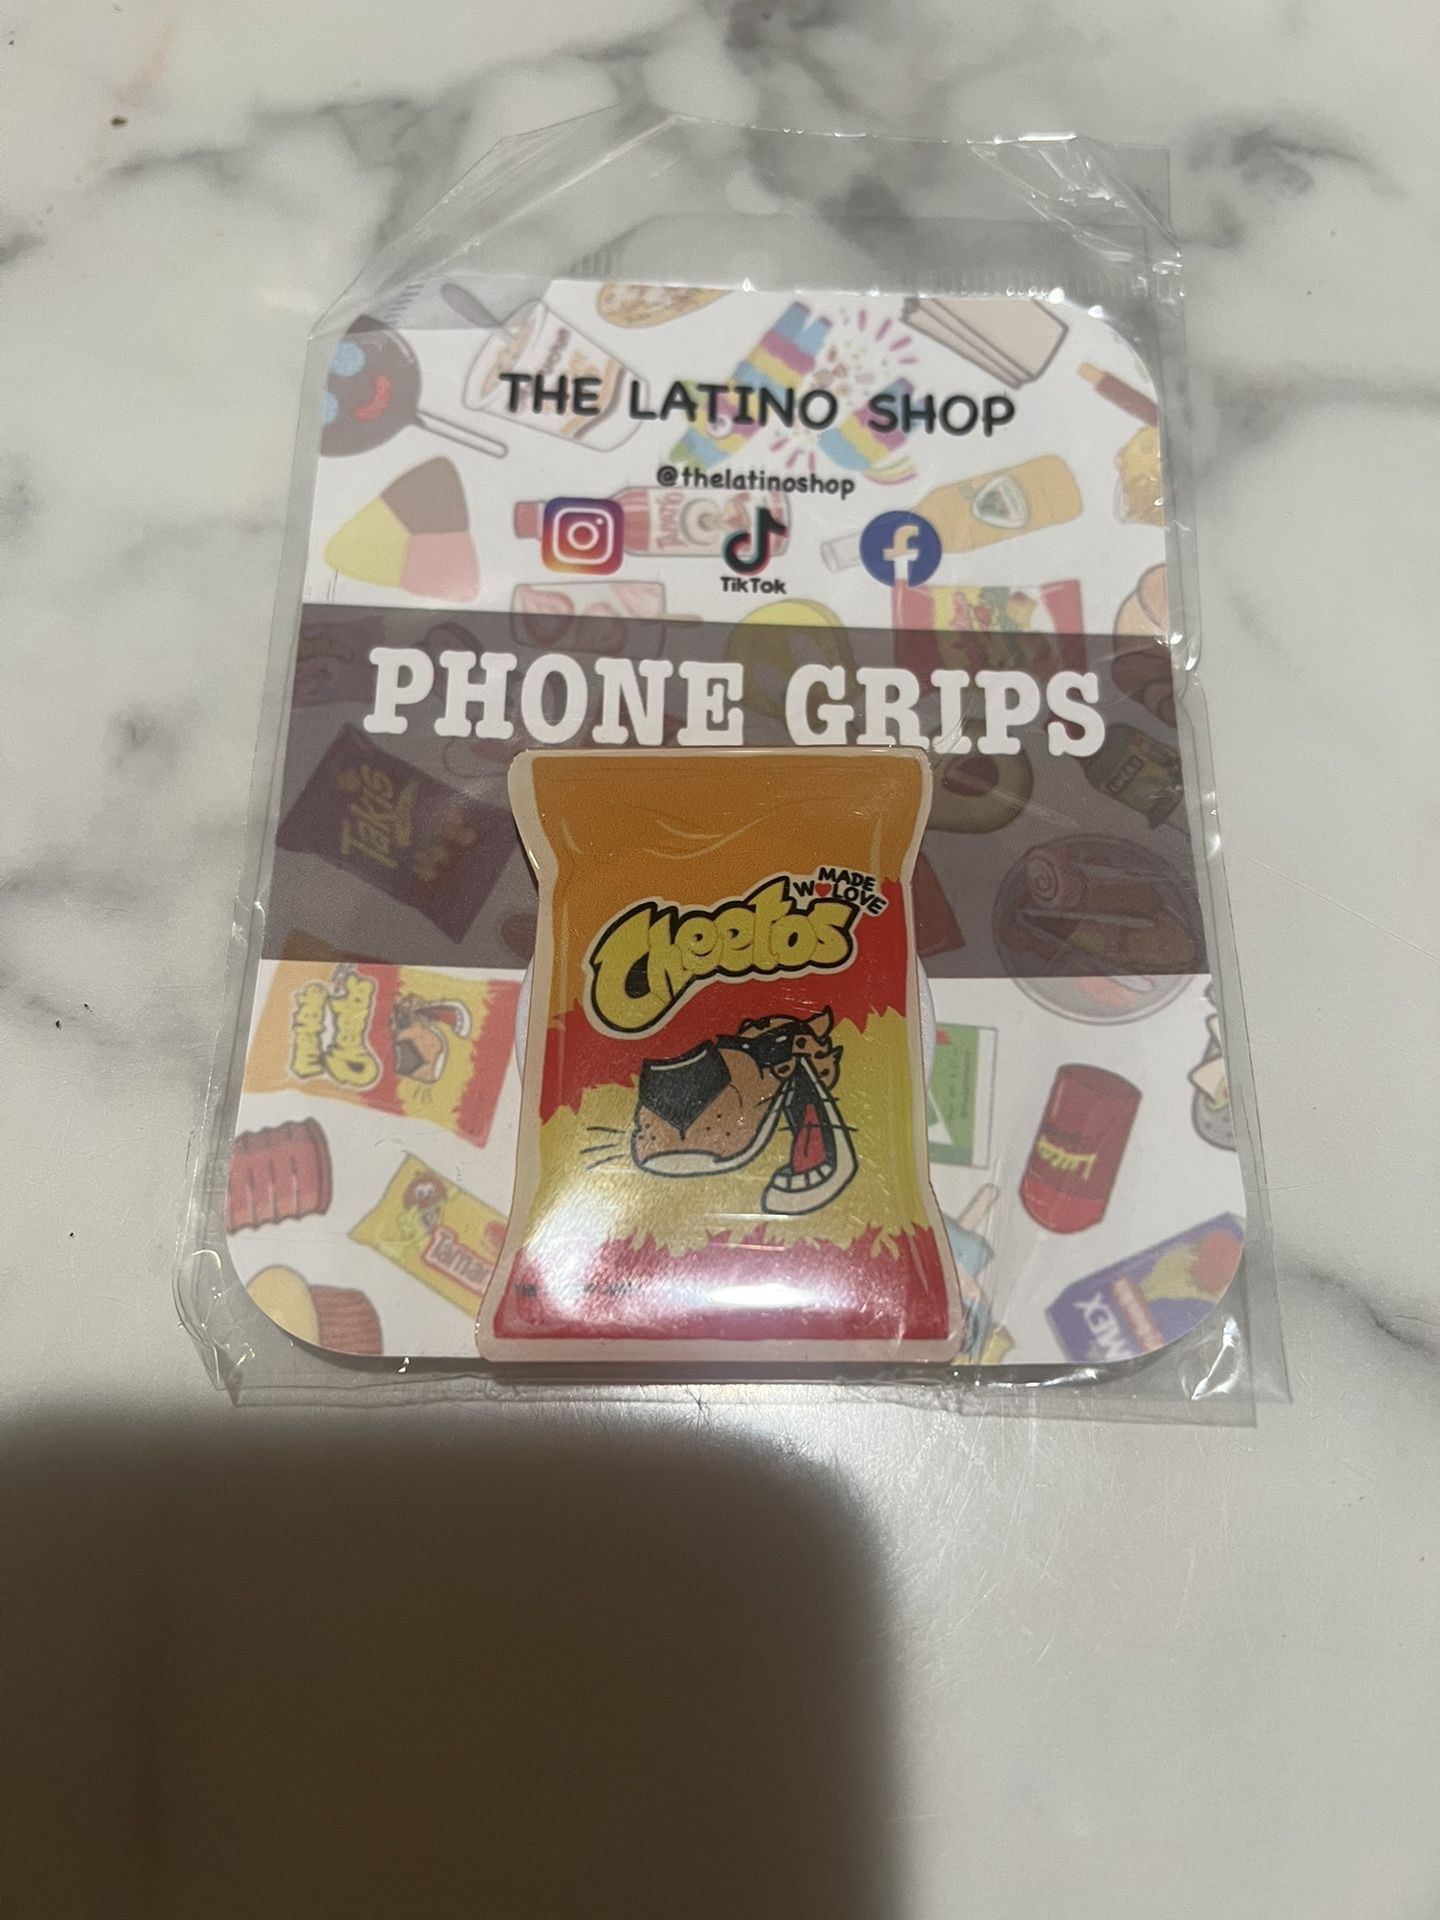 6 Dollars New Hot Cheetos Phone Grip